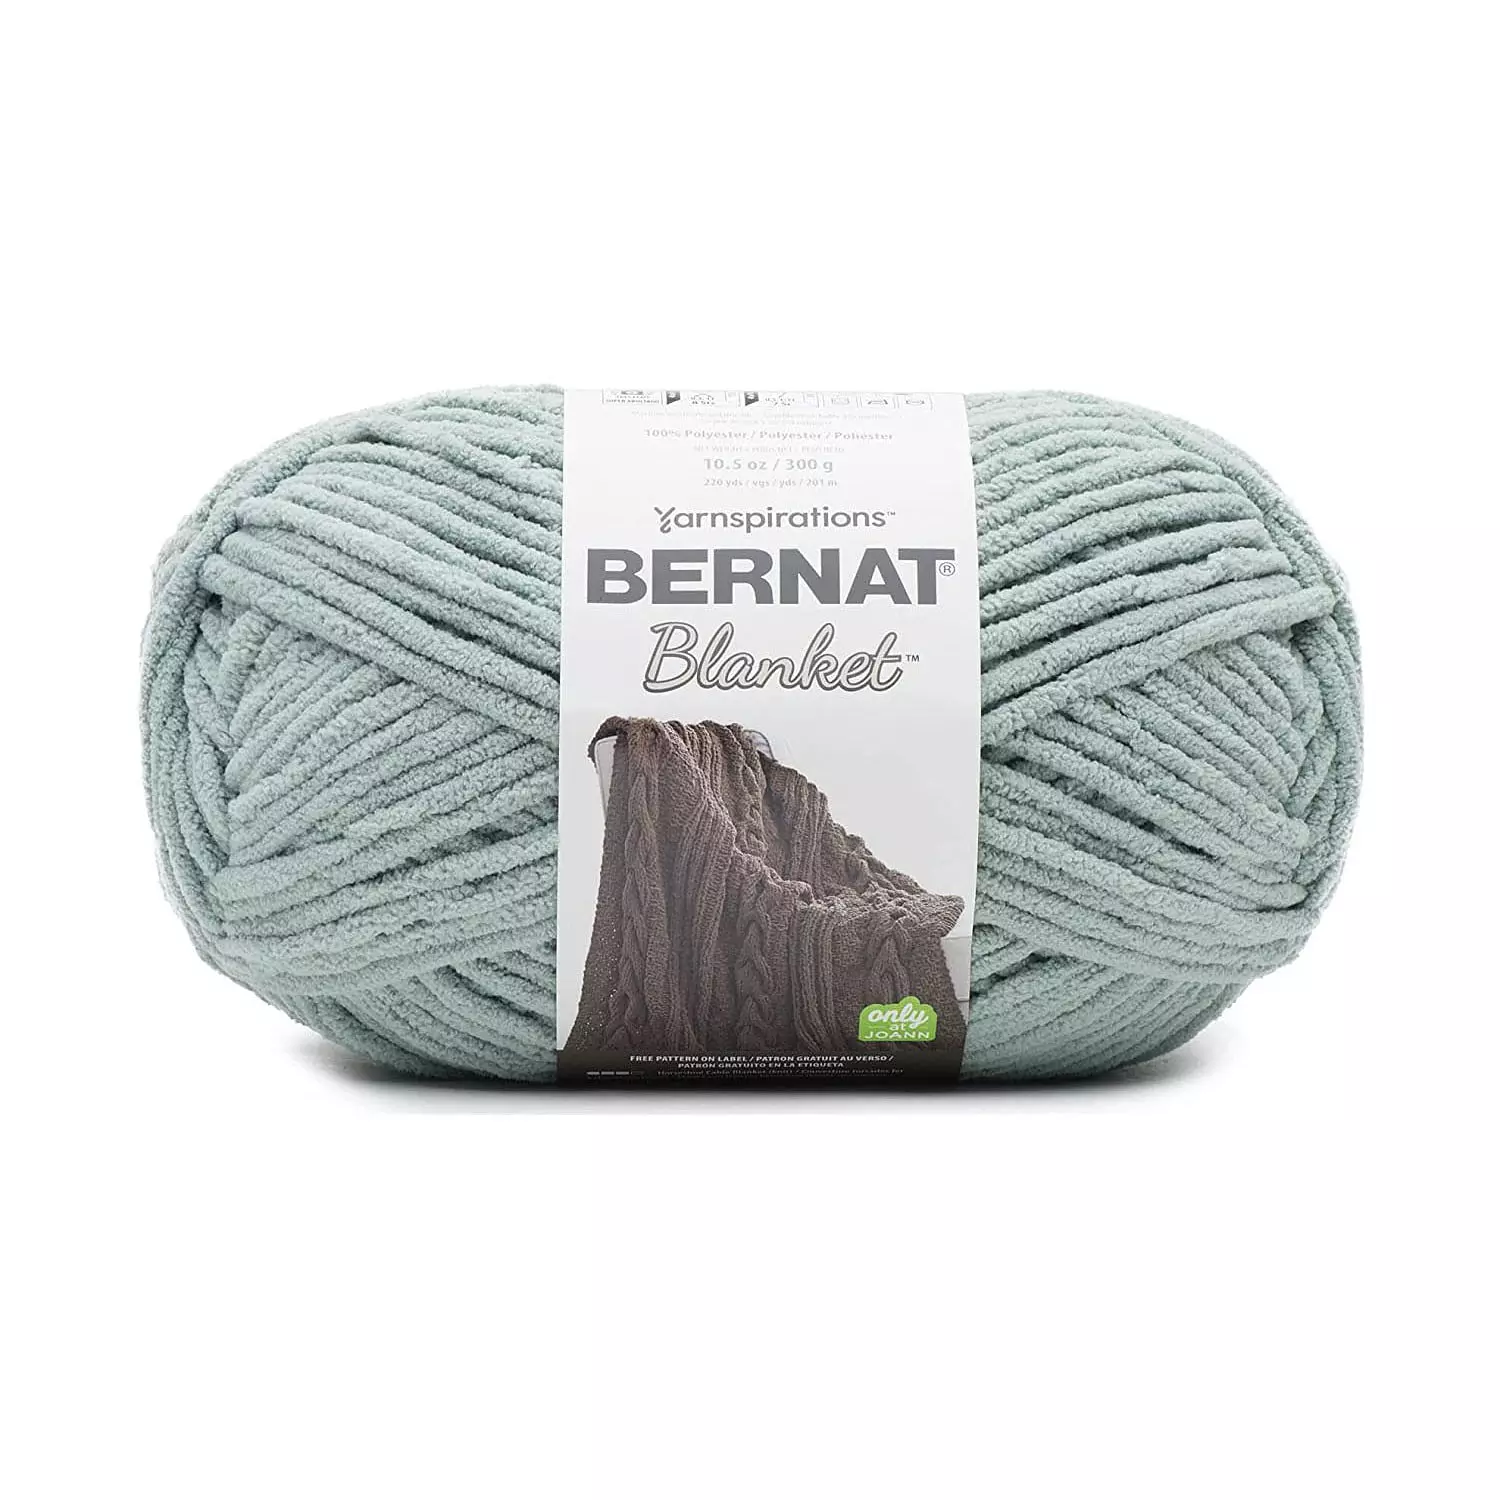 Bernat Blanket - Yarn, smoky green